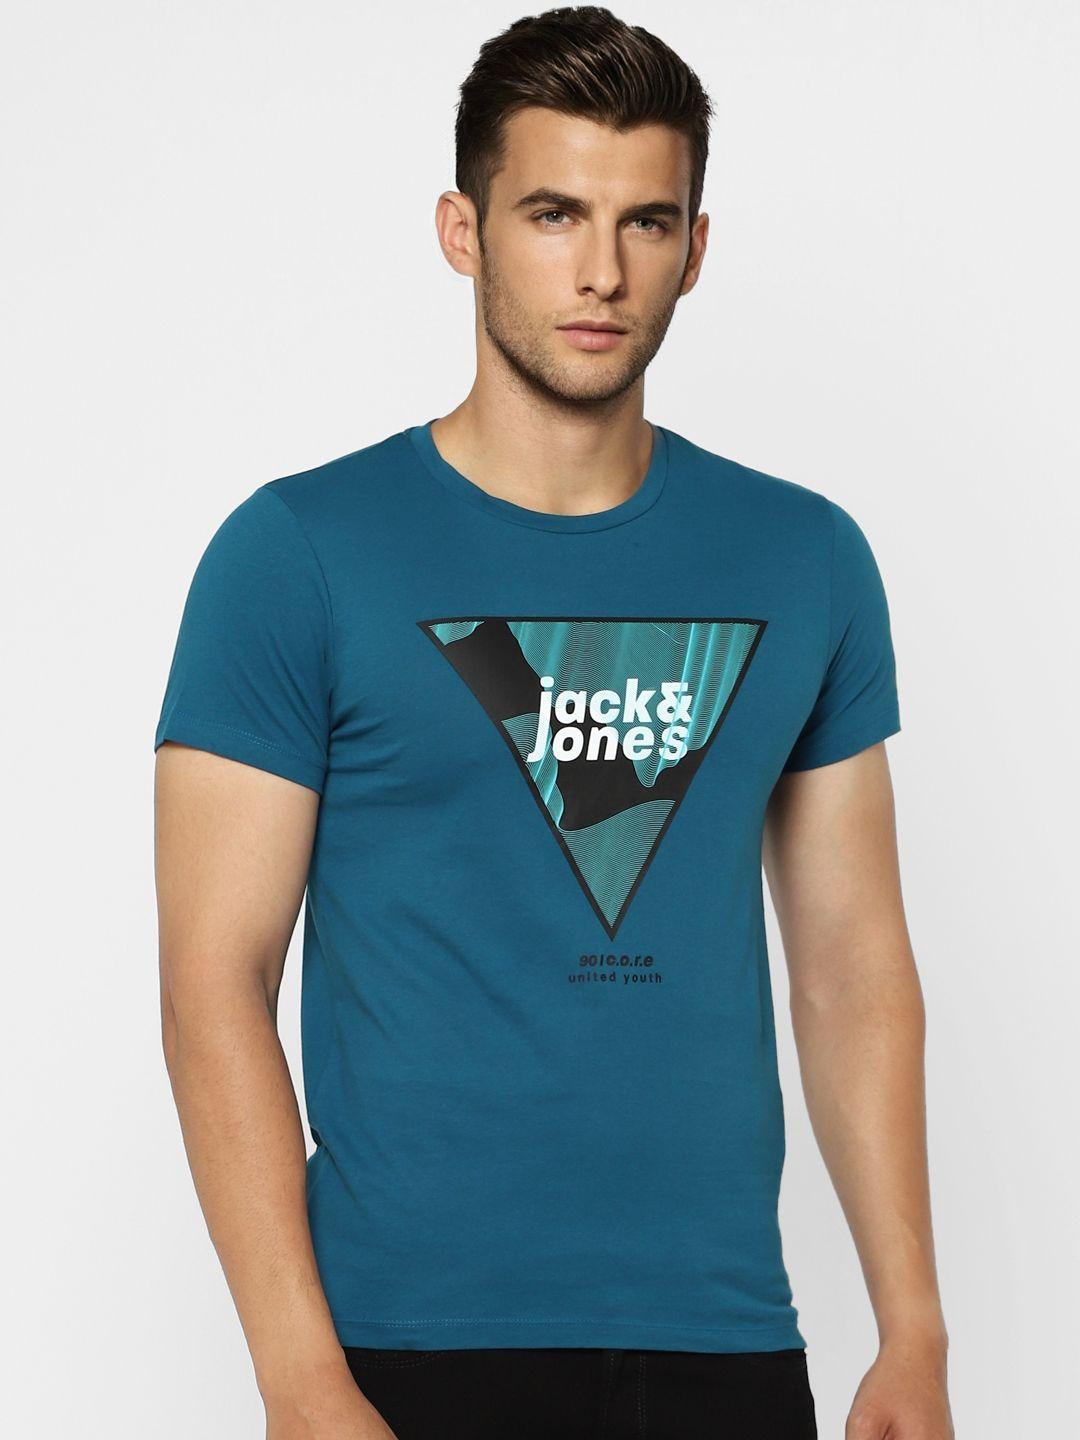 jack  jones men teal blue brand logo printed slim fit pure cotton t-shirt